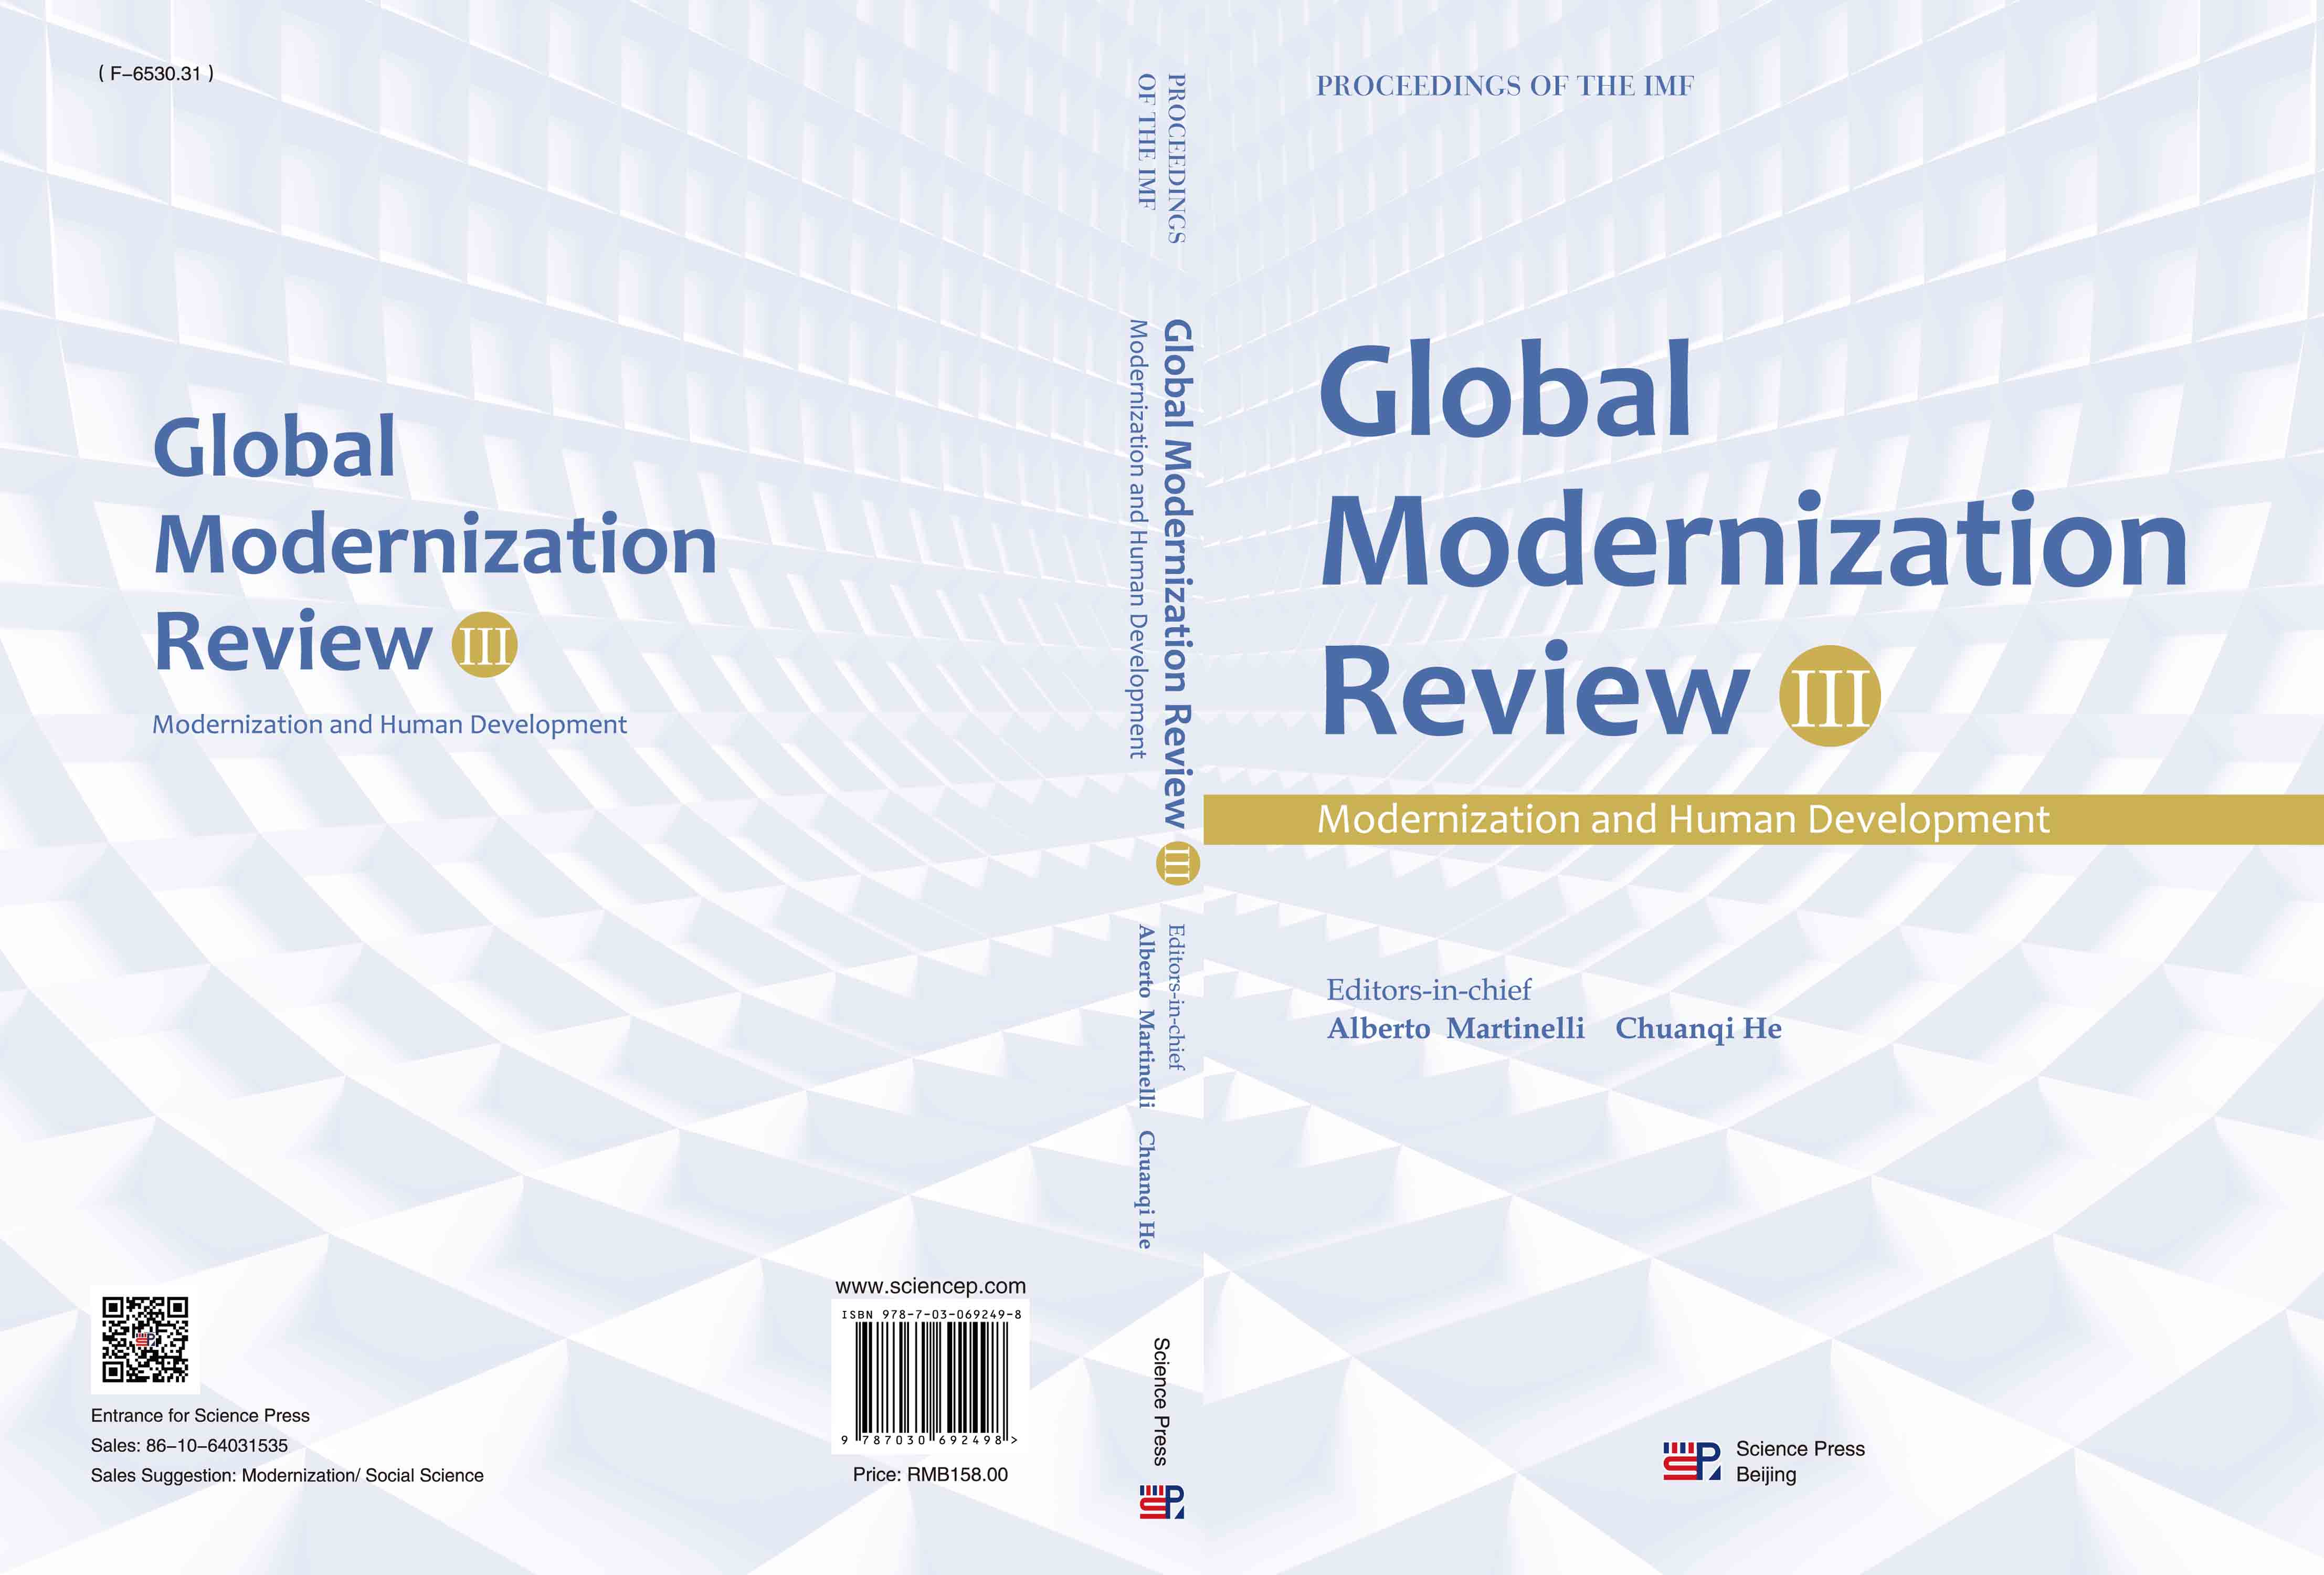 Global Modernization Review (III): Modernization and Human Development